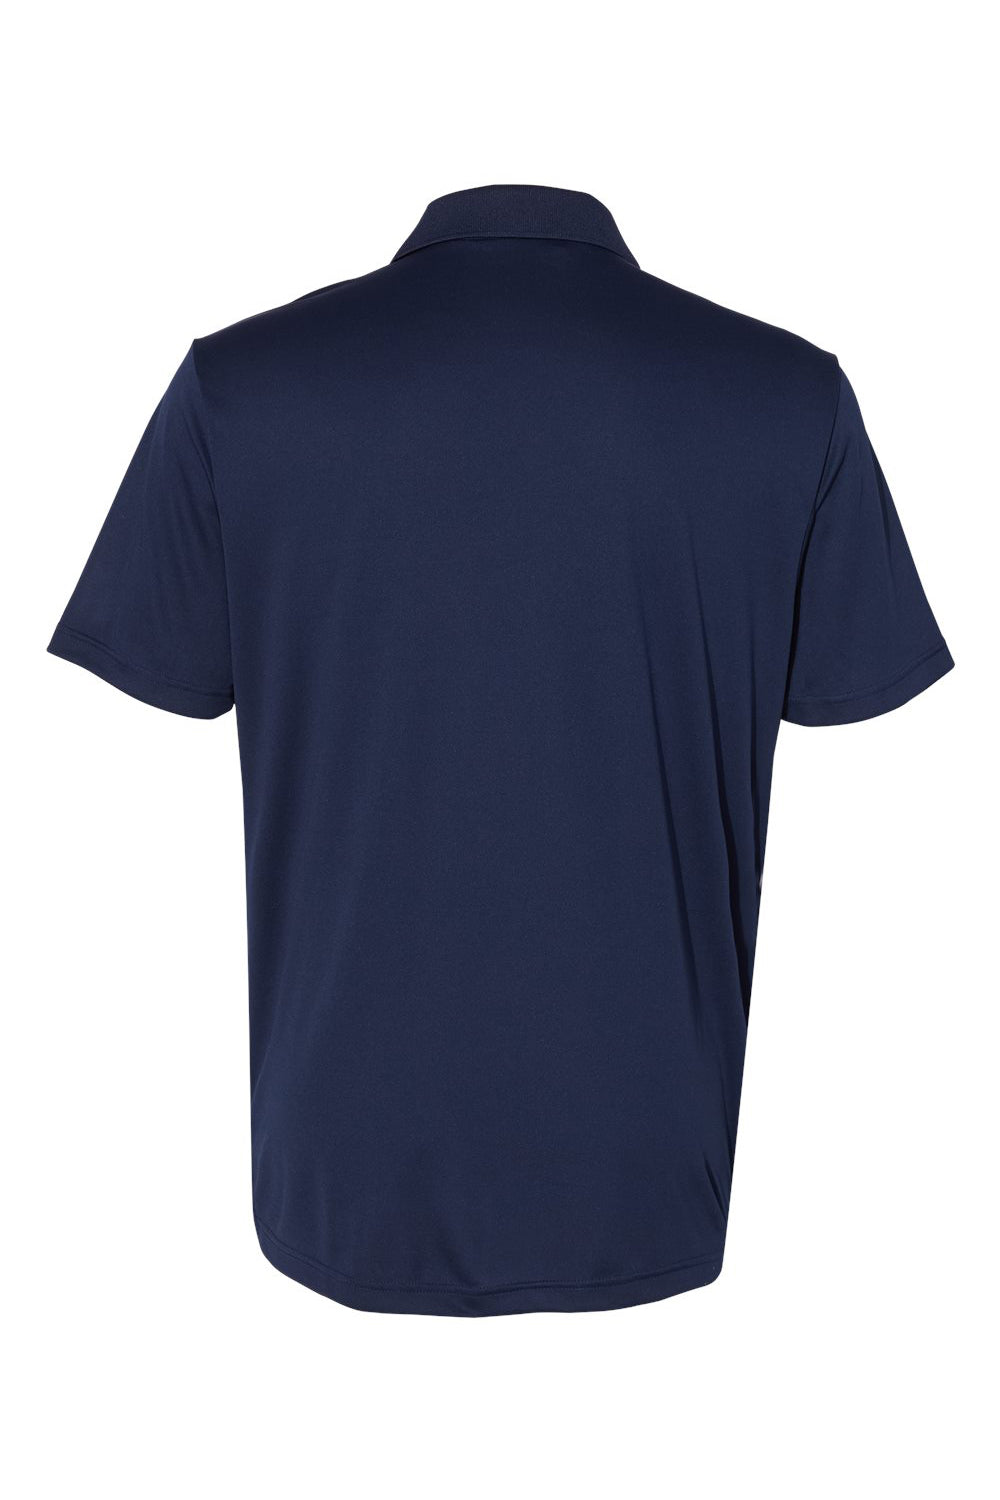 Adidas A230 Mens Performance UPF 50+ Short Sleeve Polo Shirt Navy Blue Flat Back